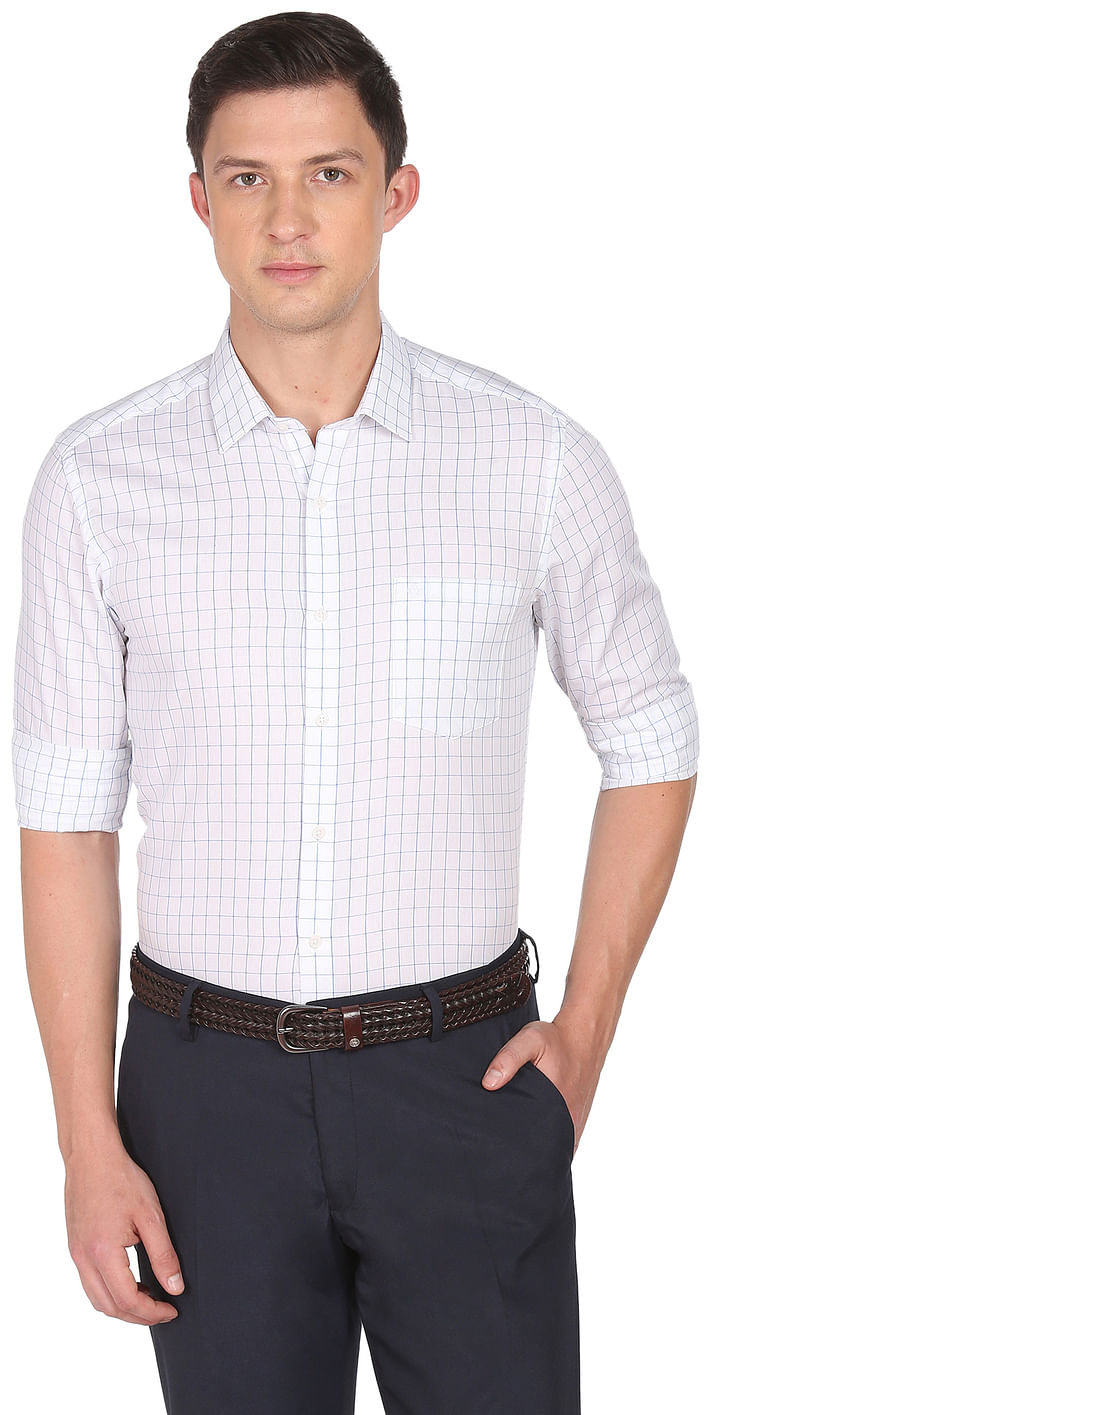 Buy Arrow Grid Tattersall Check Manhattan Slim Fit Shirt - NNNOW.com